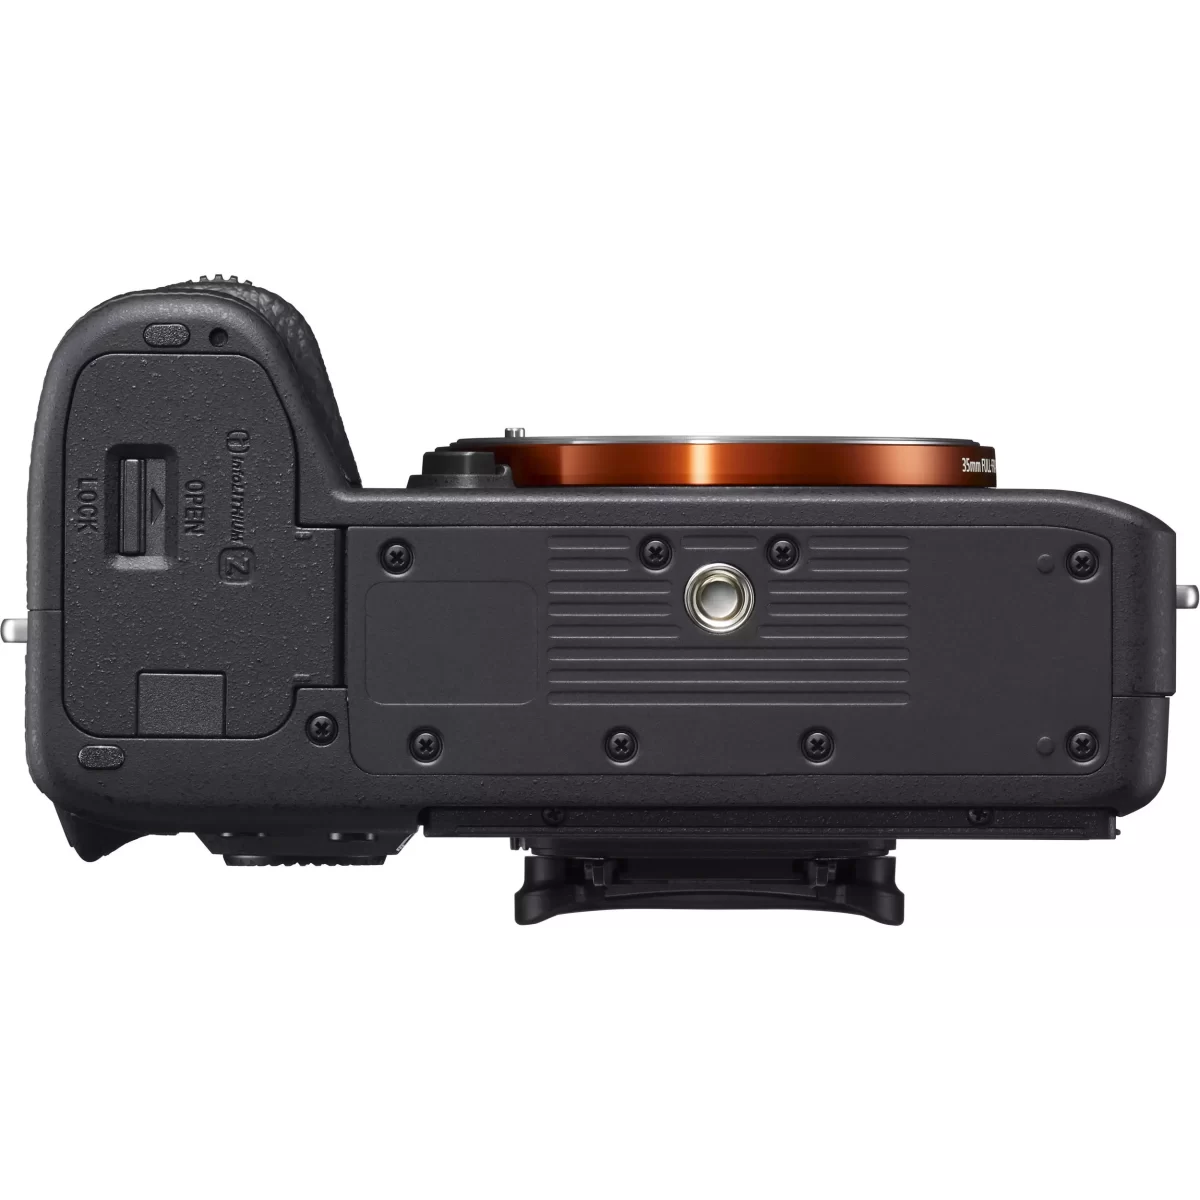 Sony a7R III Mirrorless Camera 07